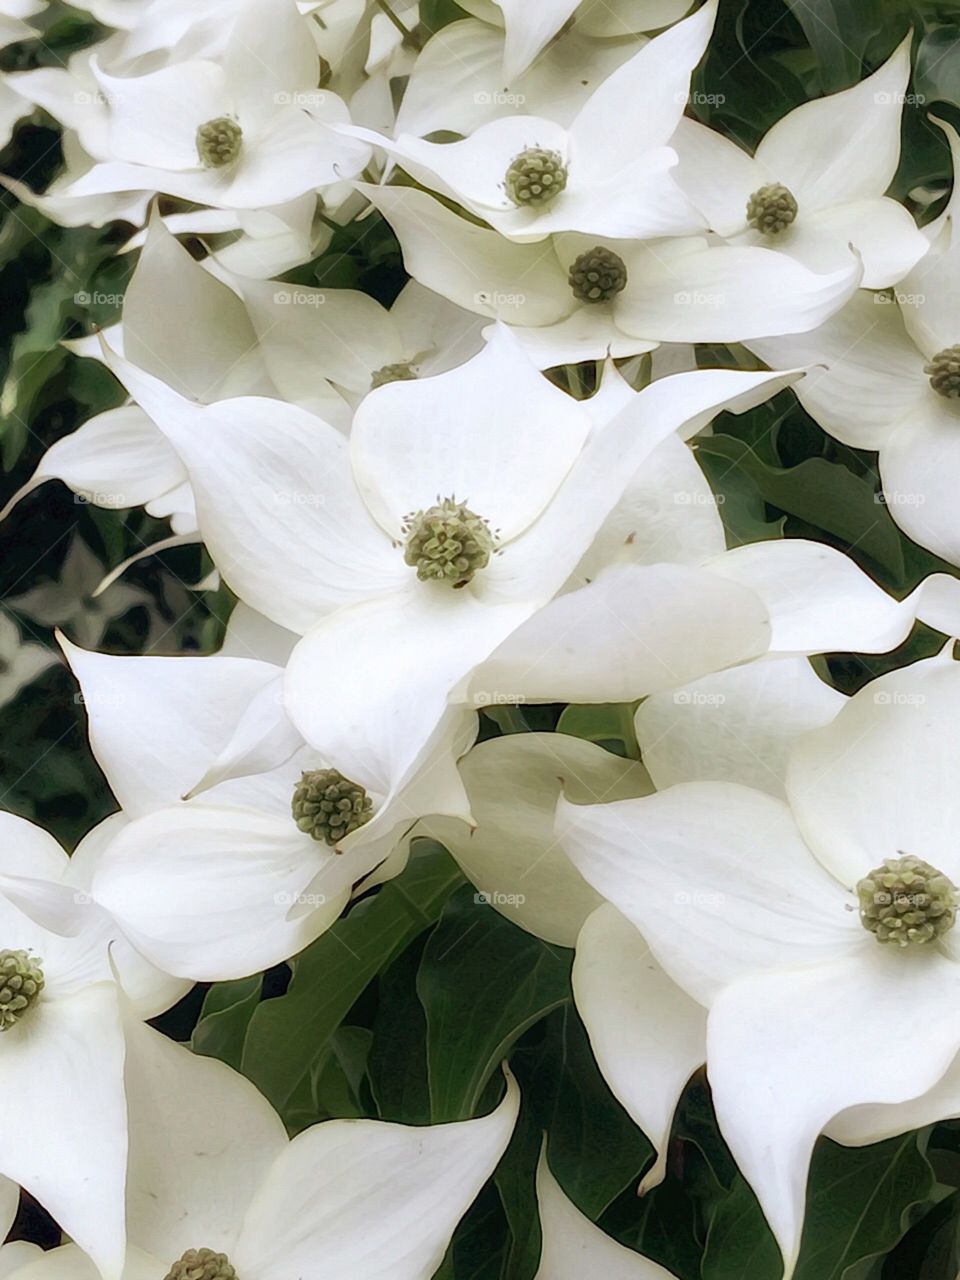 Dogwood Flowers - Central Park, New York City. Instagram,@PennyPeronto